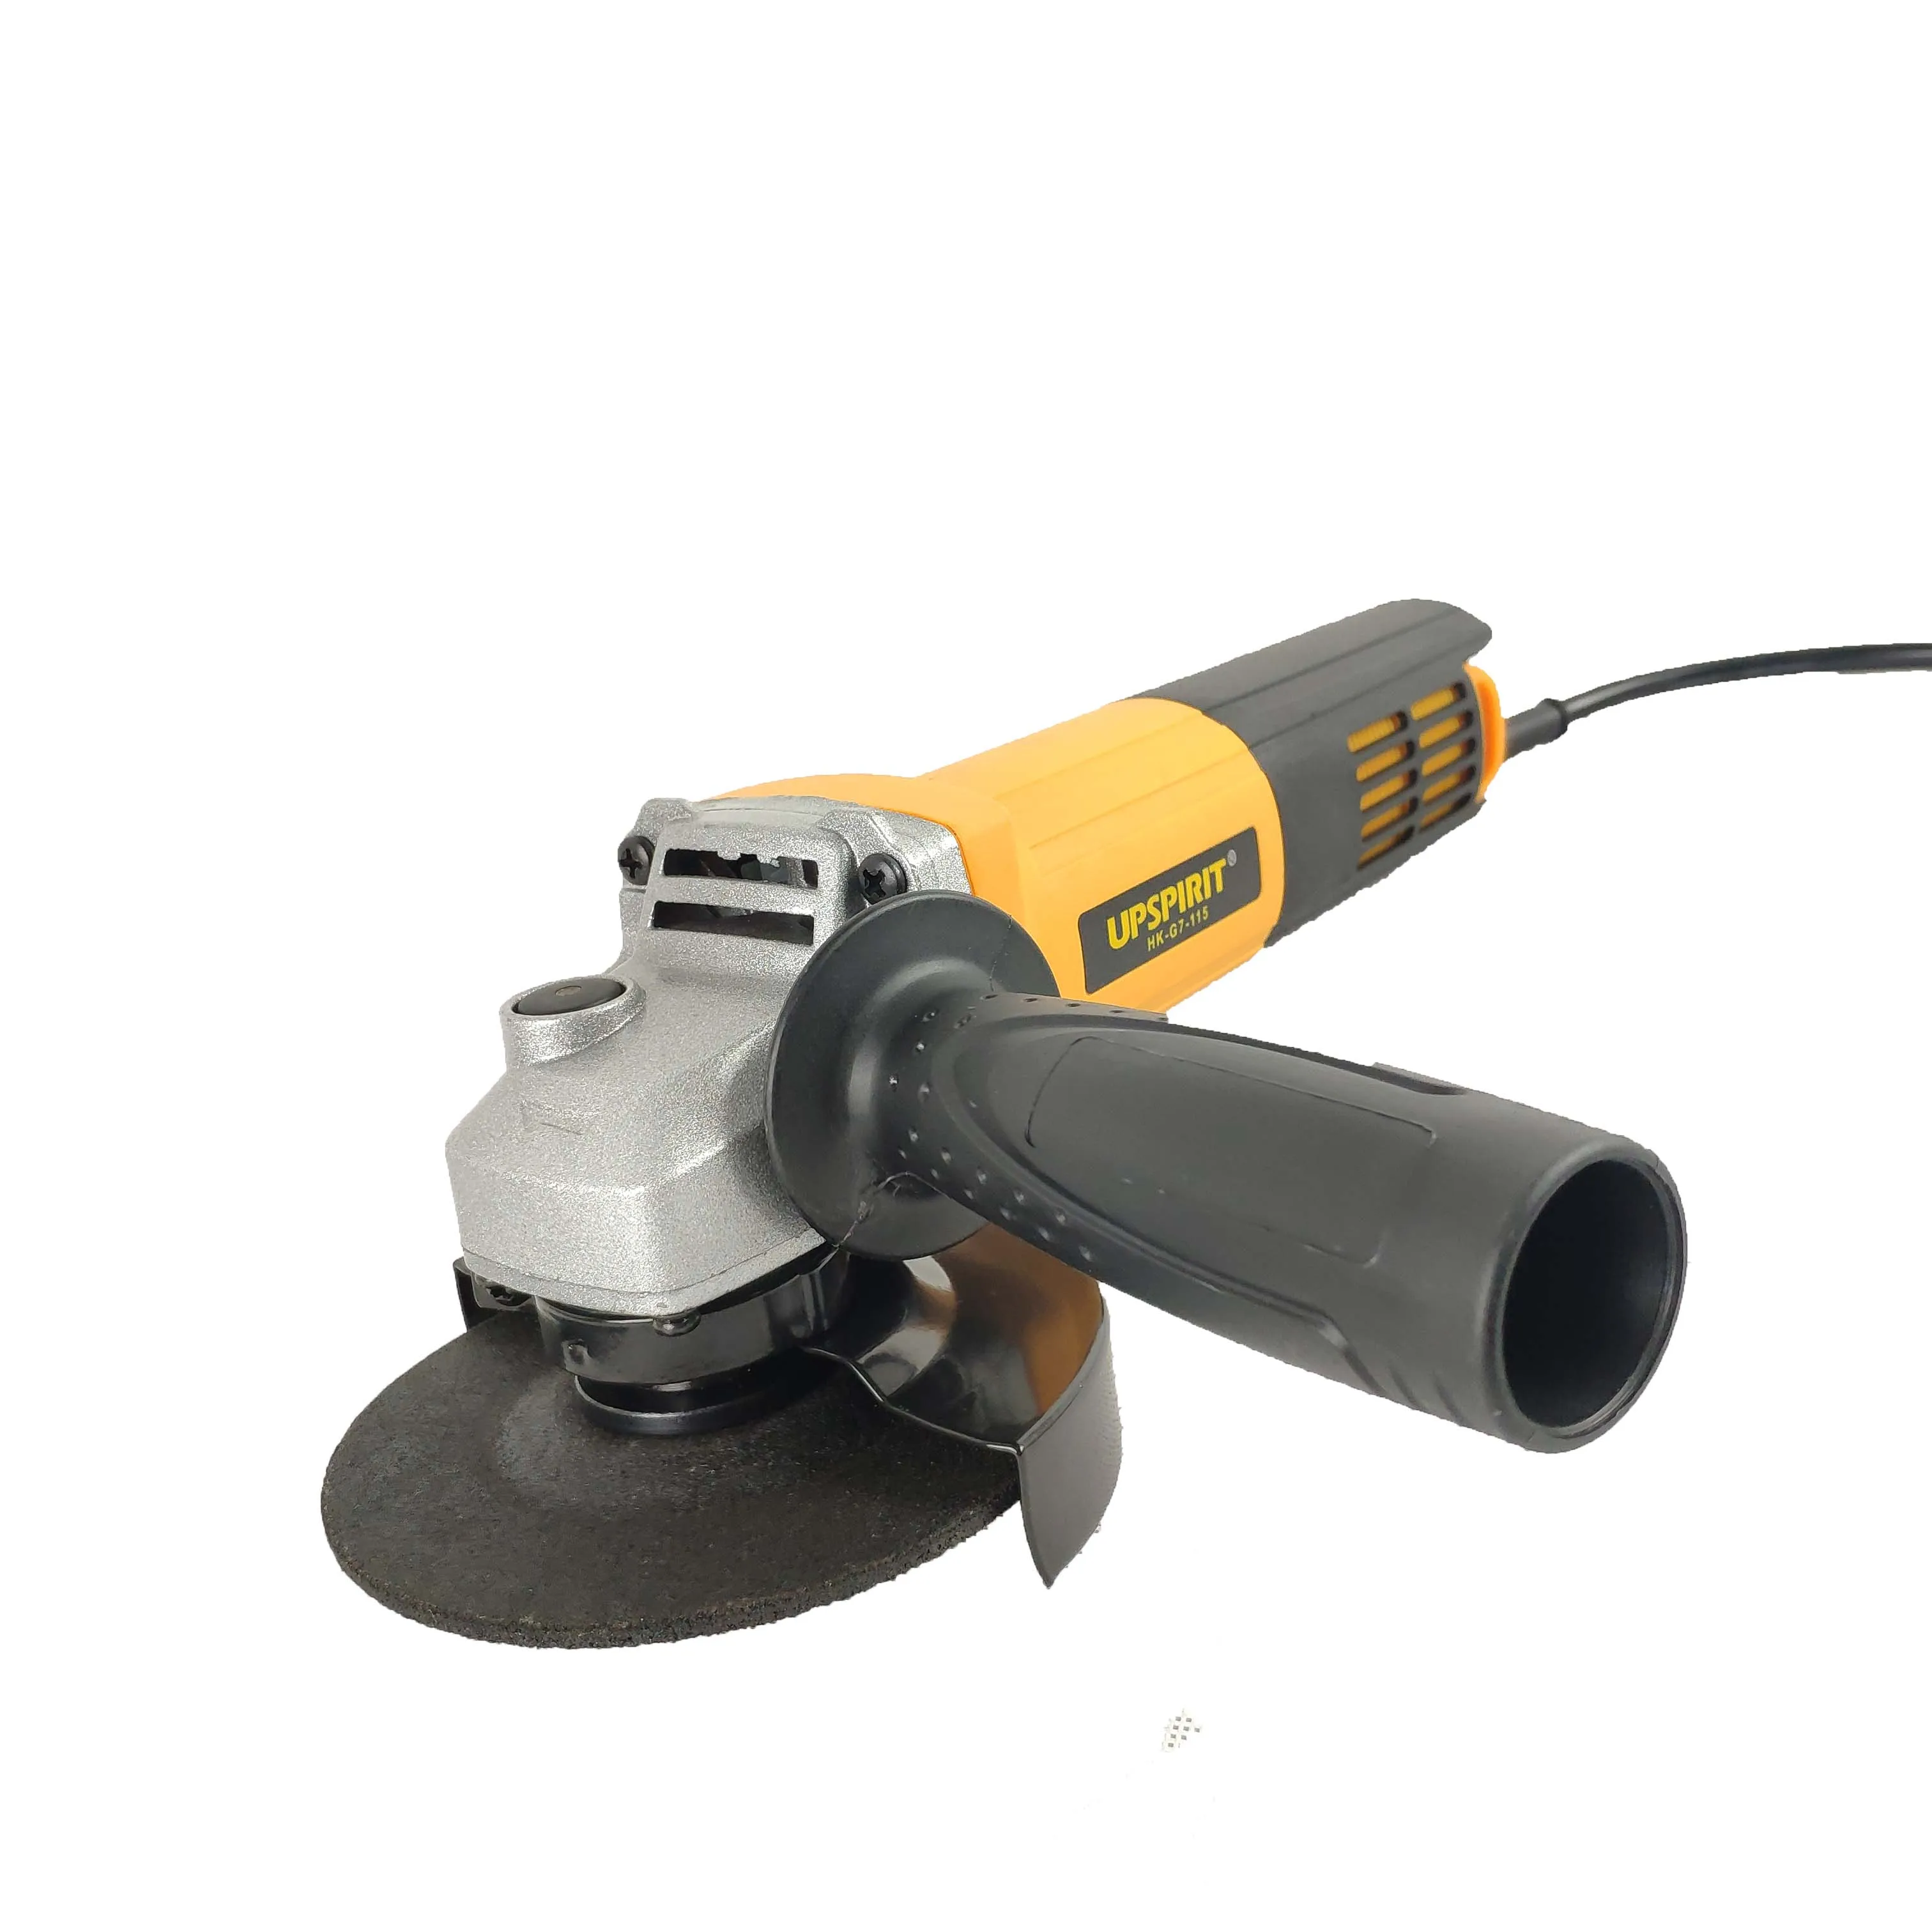 
UPSPIRIT good price of 4 inch mini electric angle grinder  (62217211938)